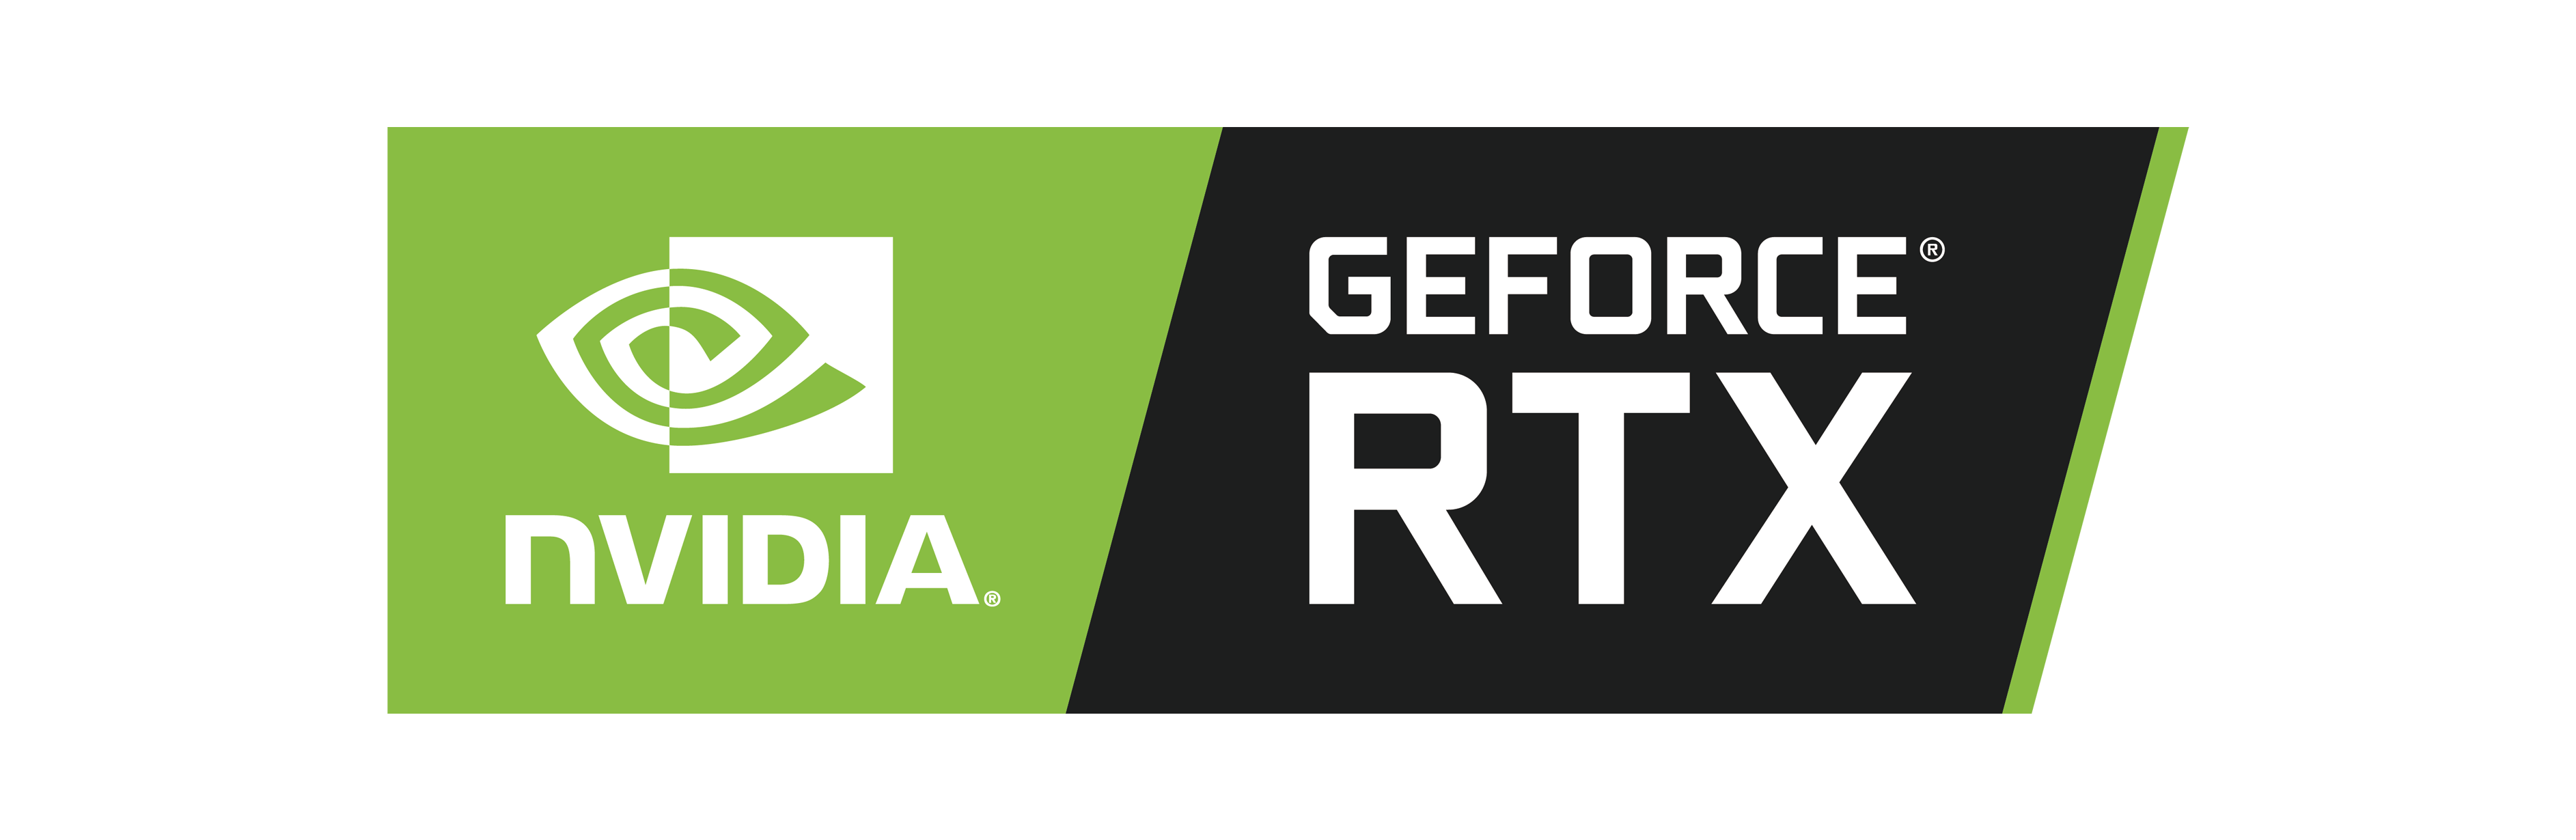 NVIDIA GeForce RTX 2080 Ti (Ref)